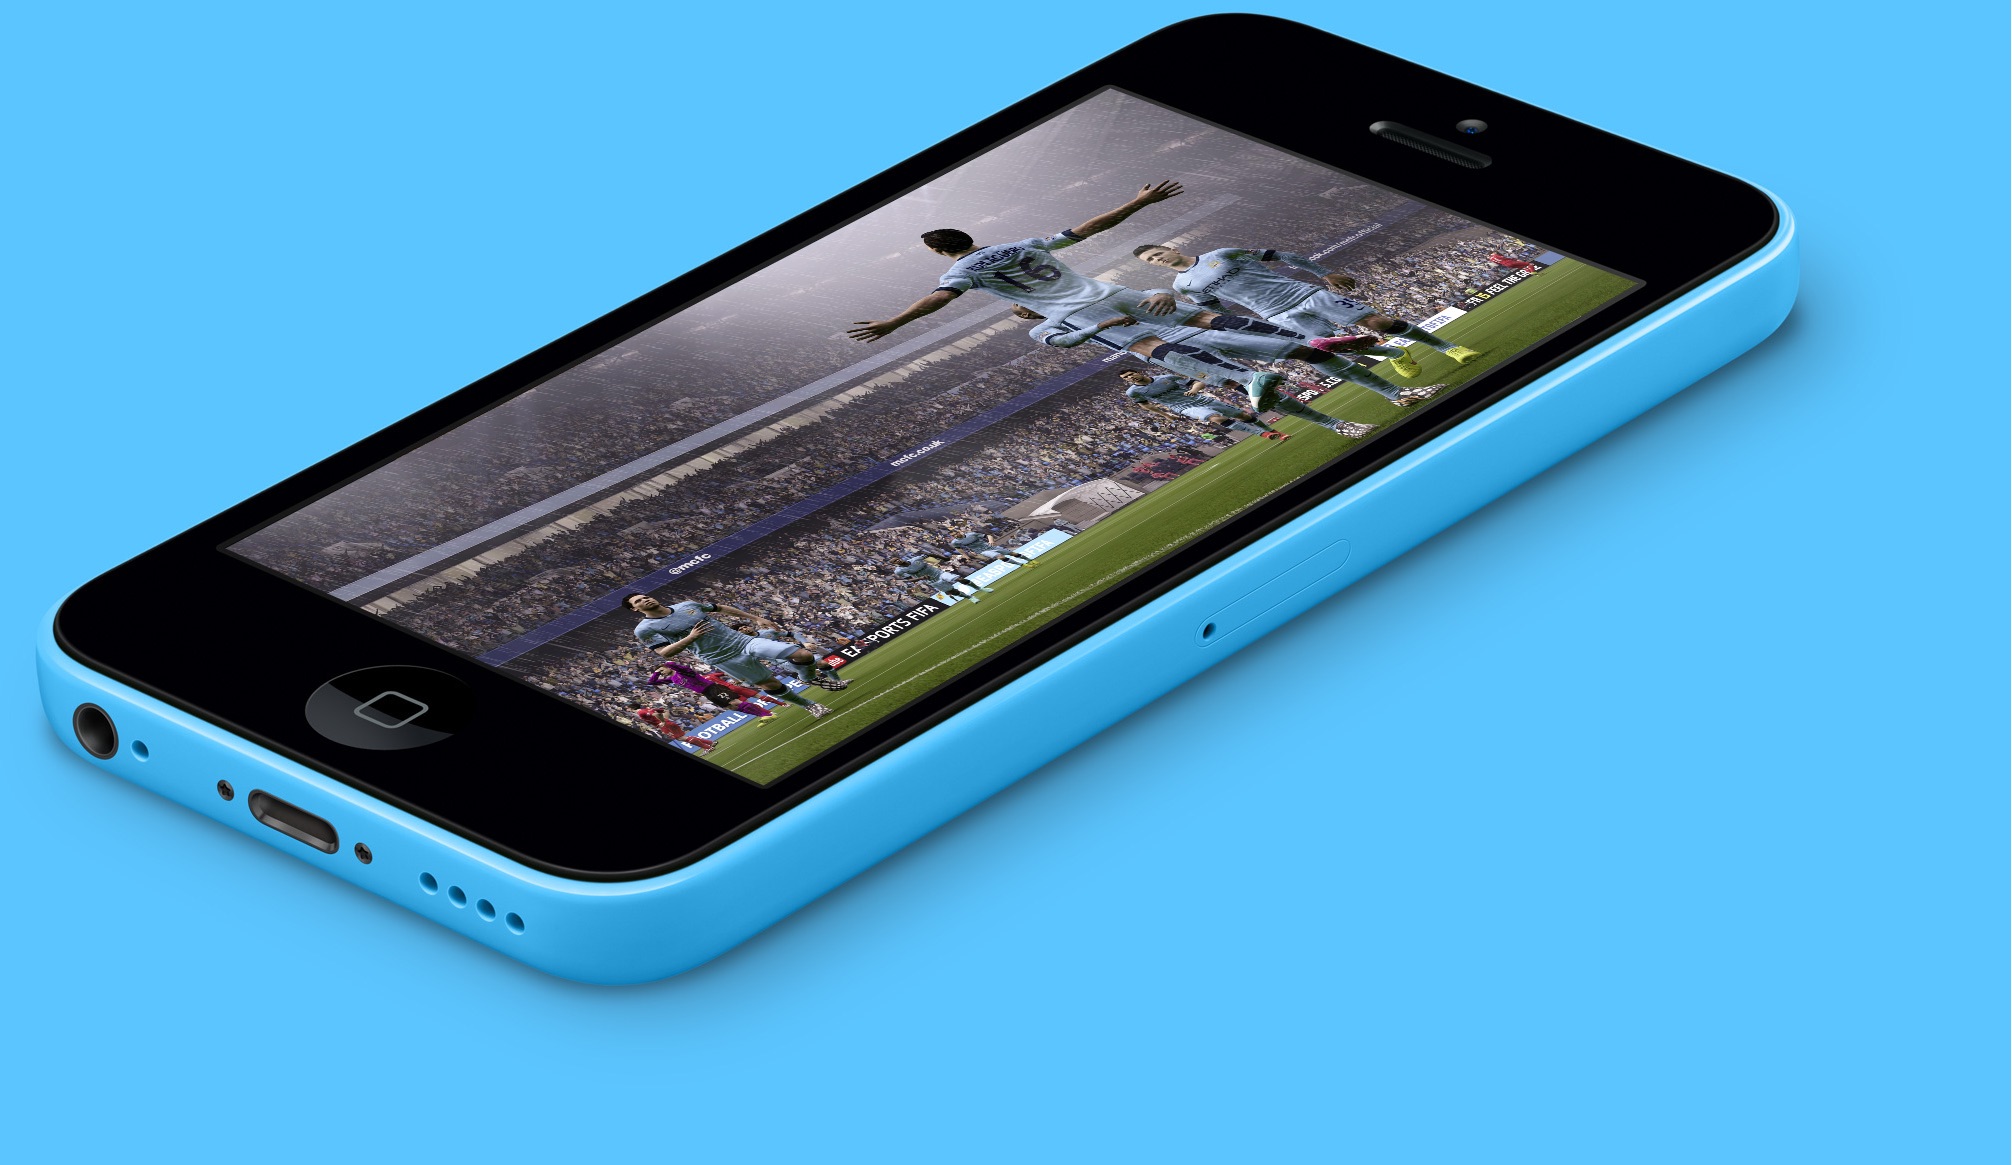 EA SPORTS FIFA Mobie on iPhone 5c